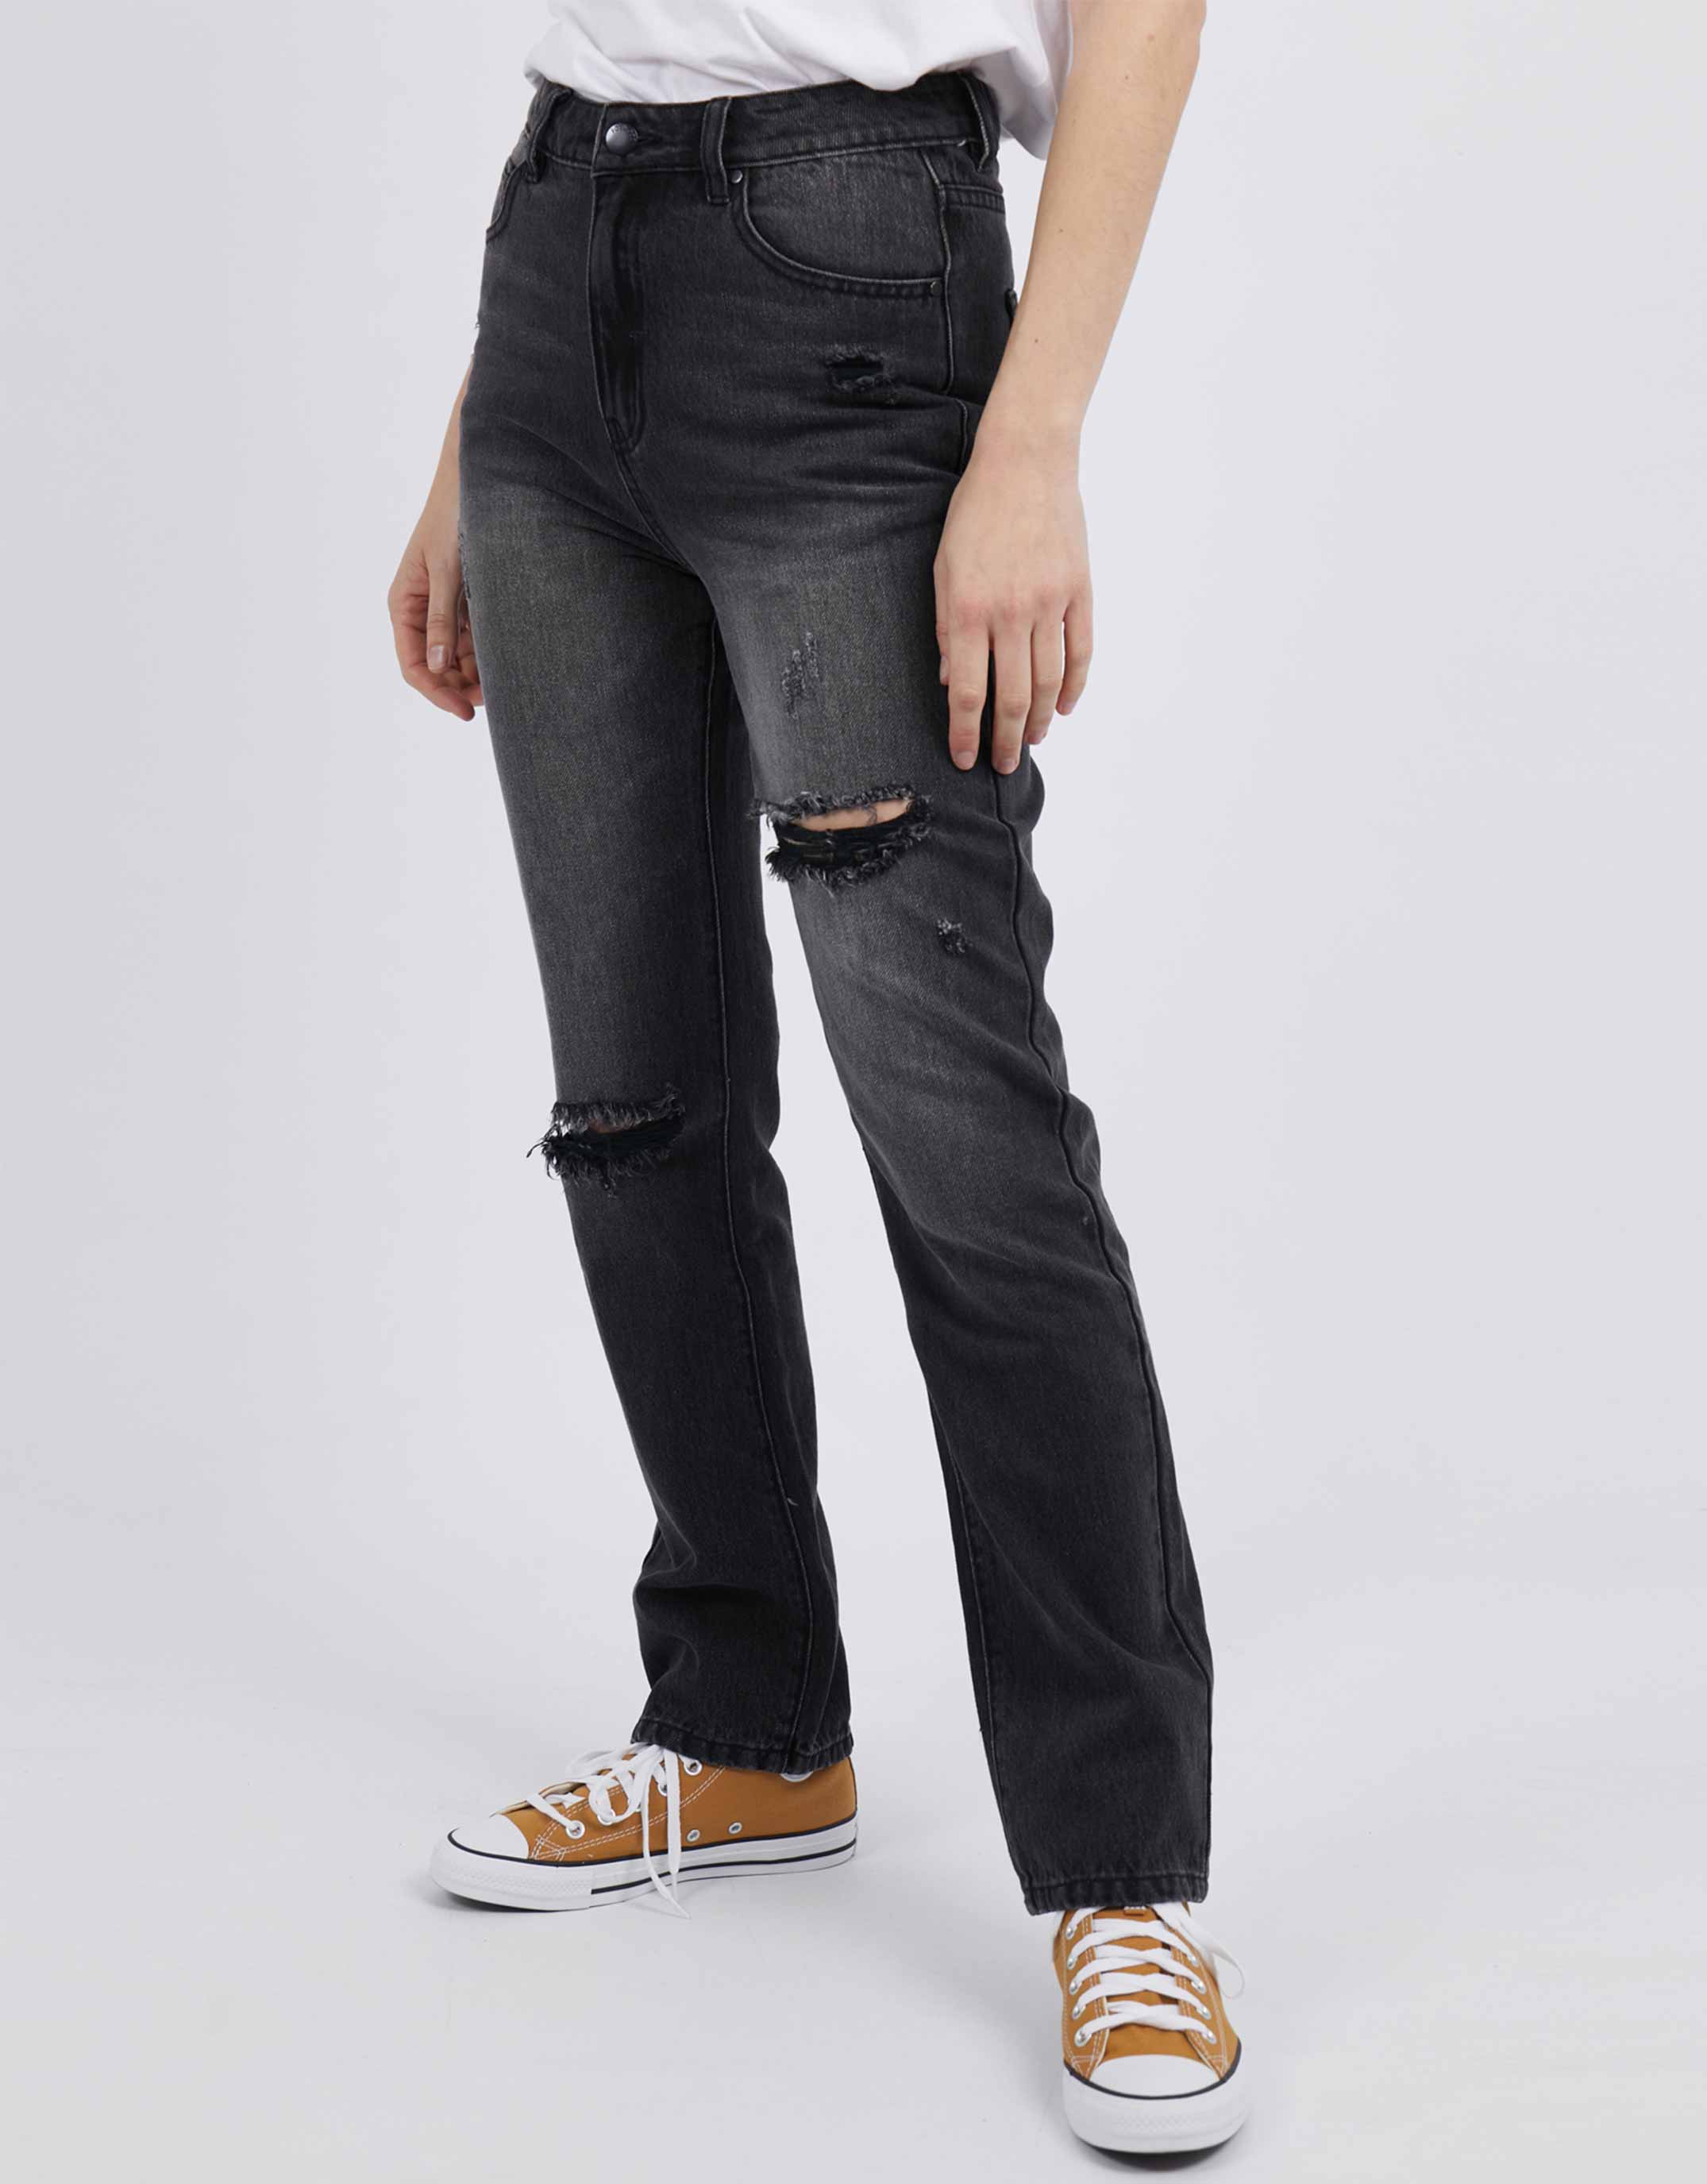 foxwood-tori-jeans-washed-black-womens-clothing